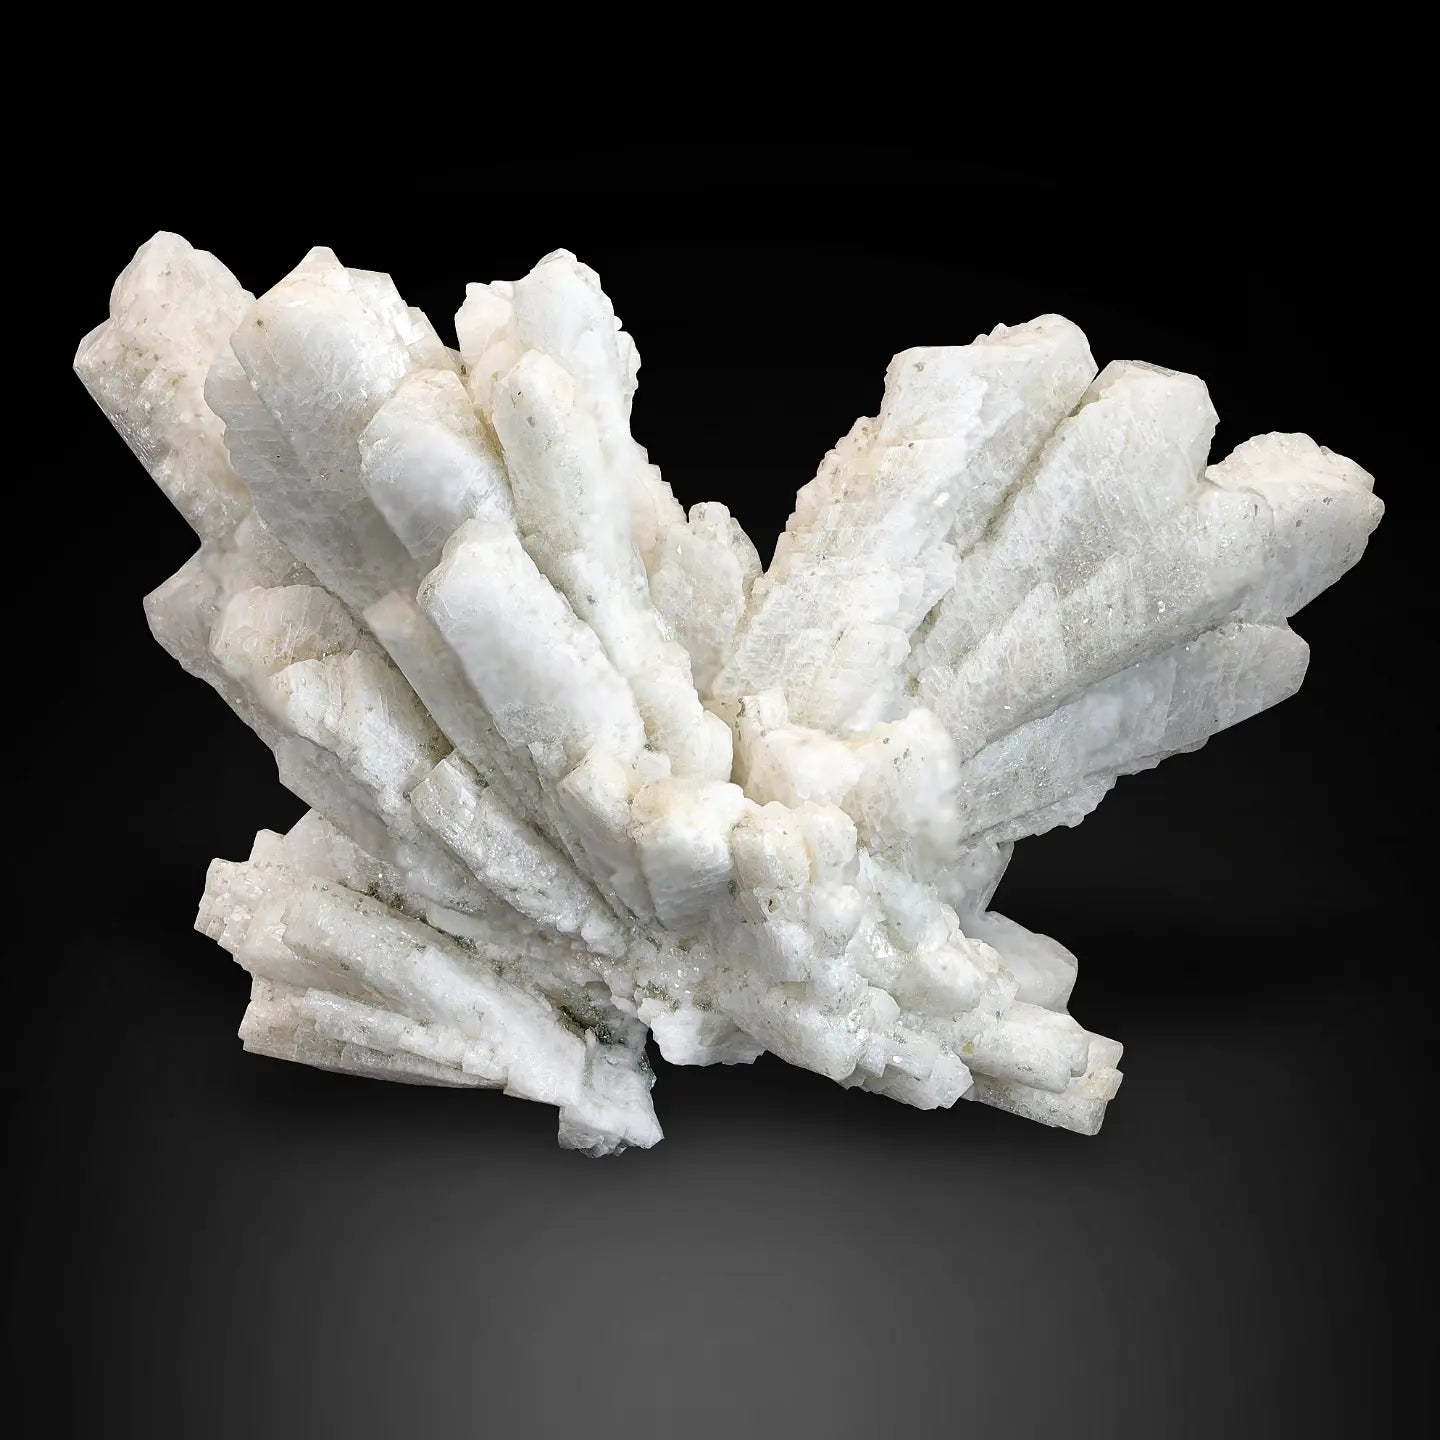 Gorgeous robust cluster of Microcline Feldspar crystals from Skardu, Pakistan